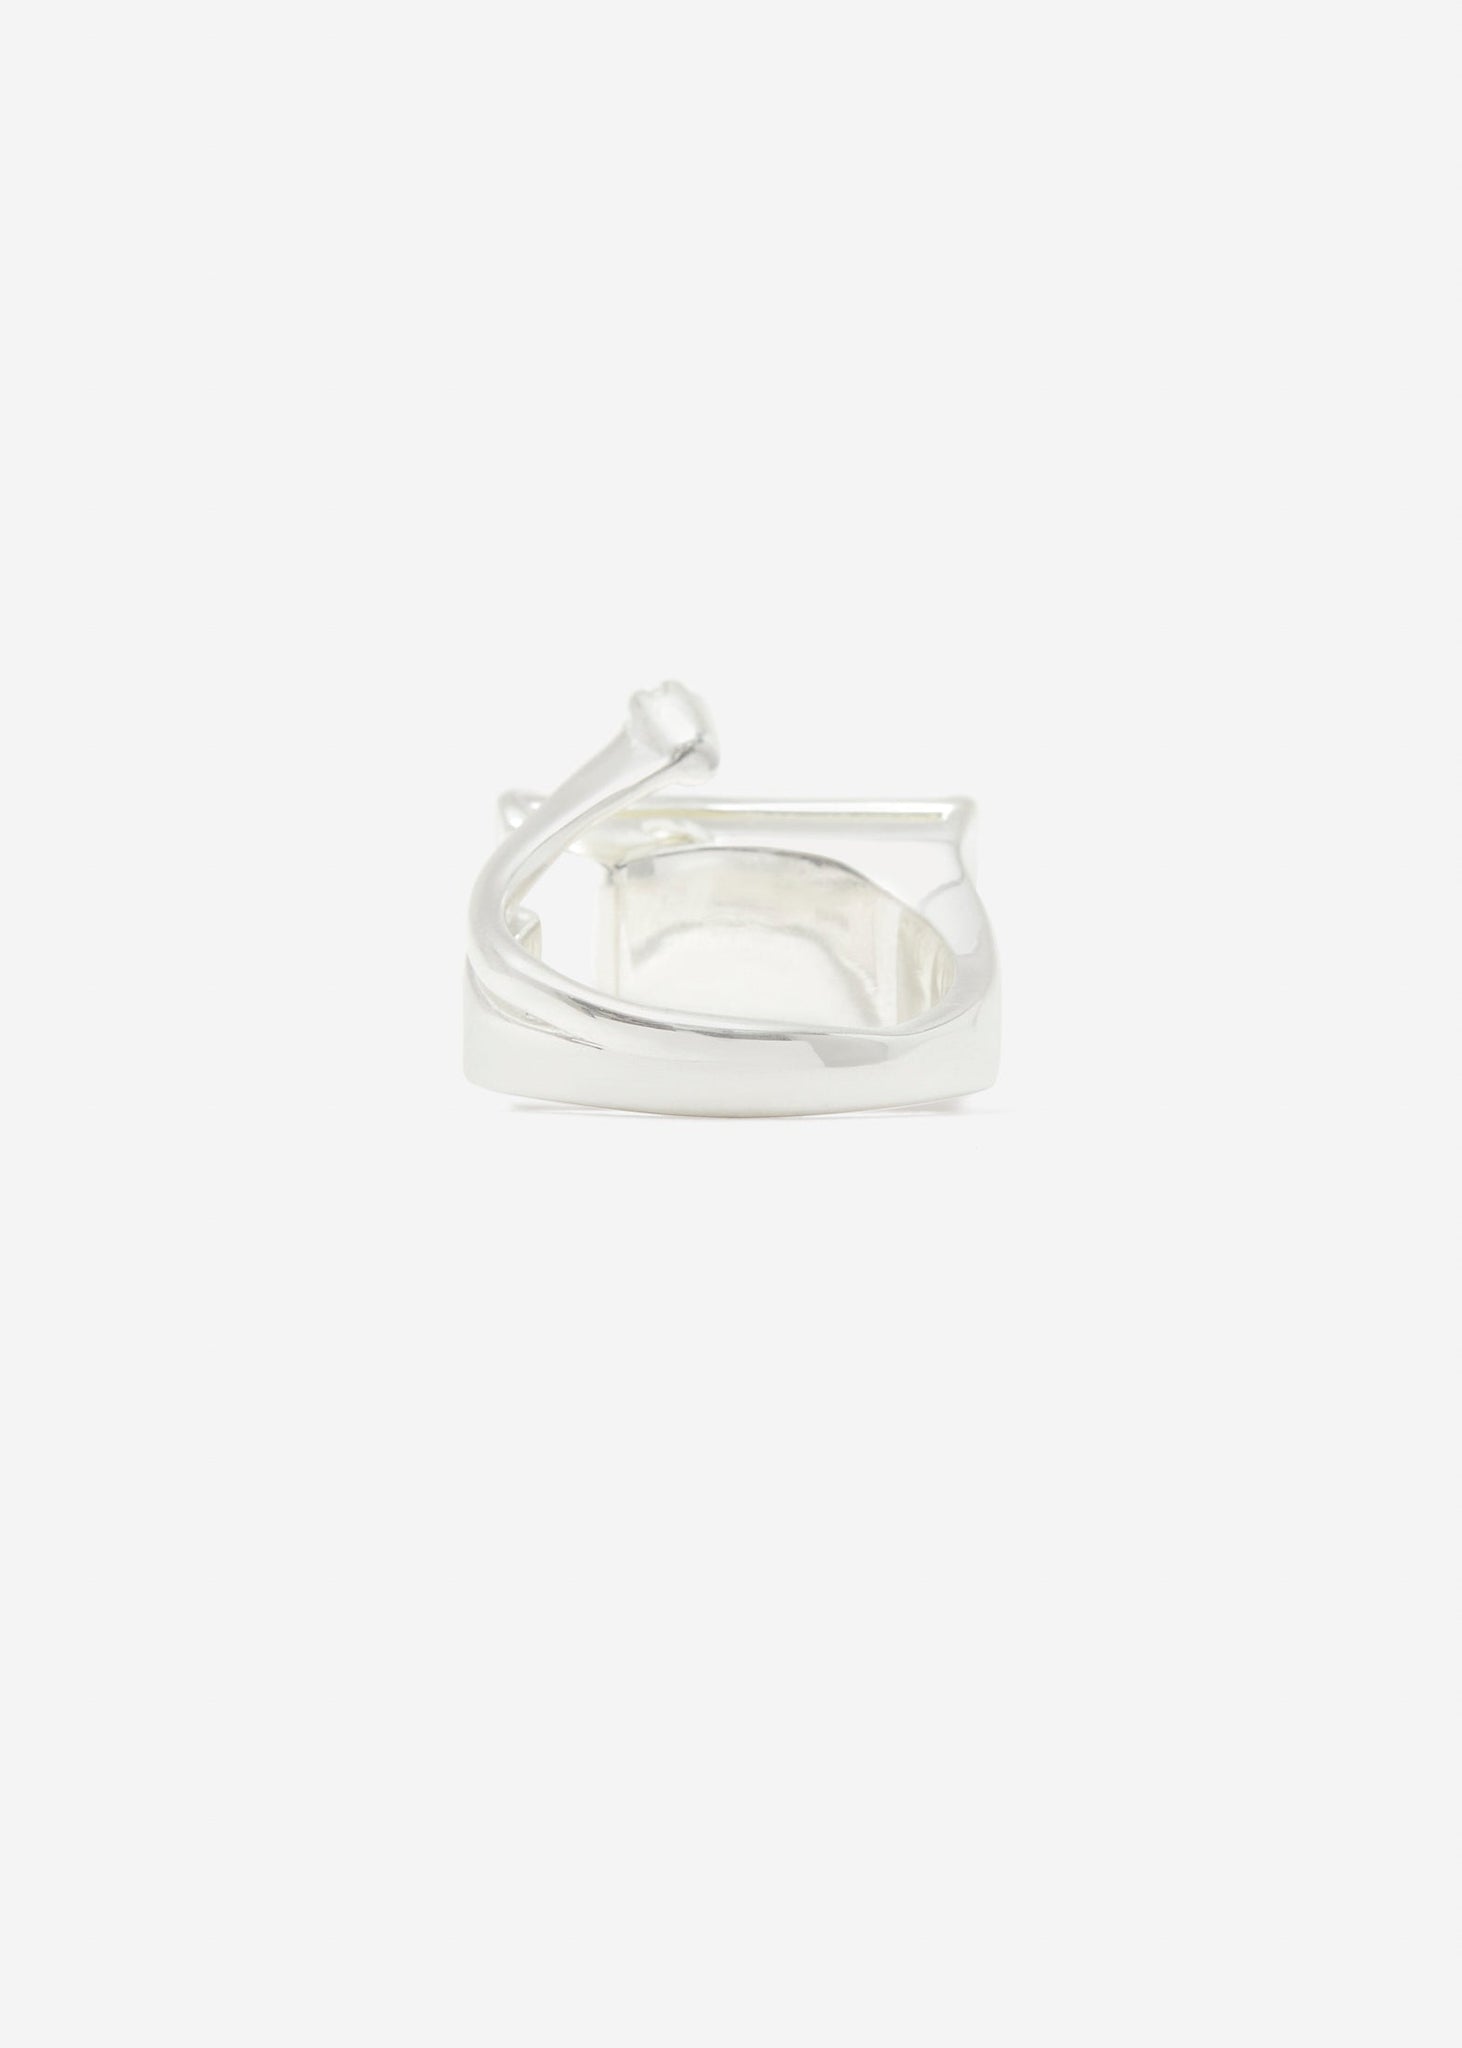 Warped Signet Ring Maxi - Lemon Quartz - Rings - Cornelia Webb - 4